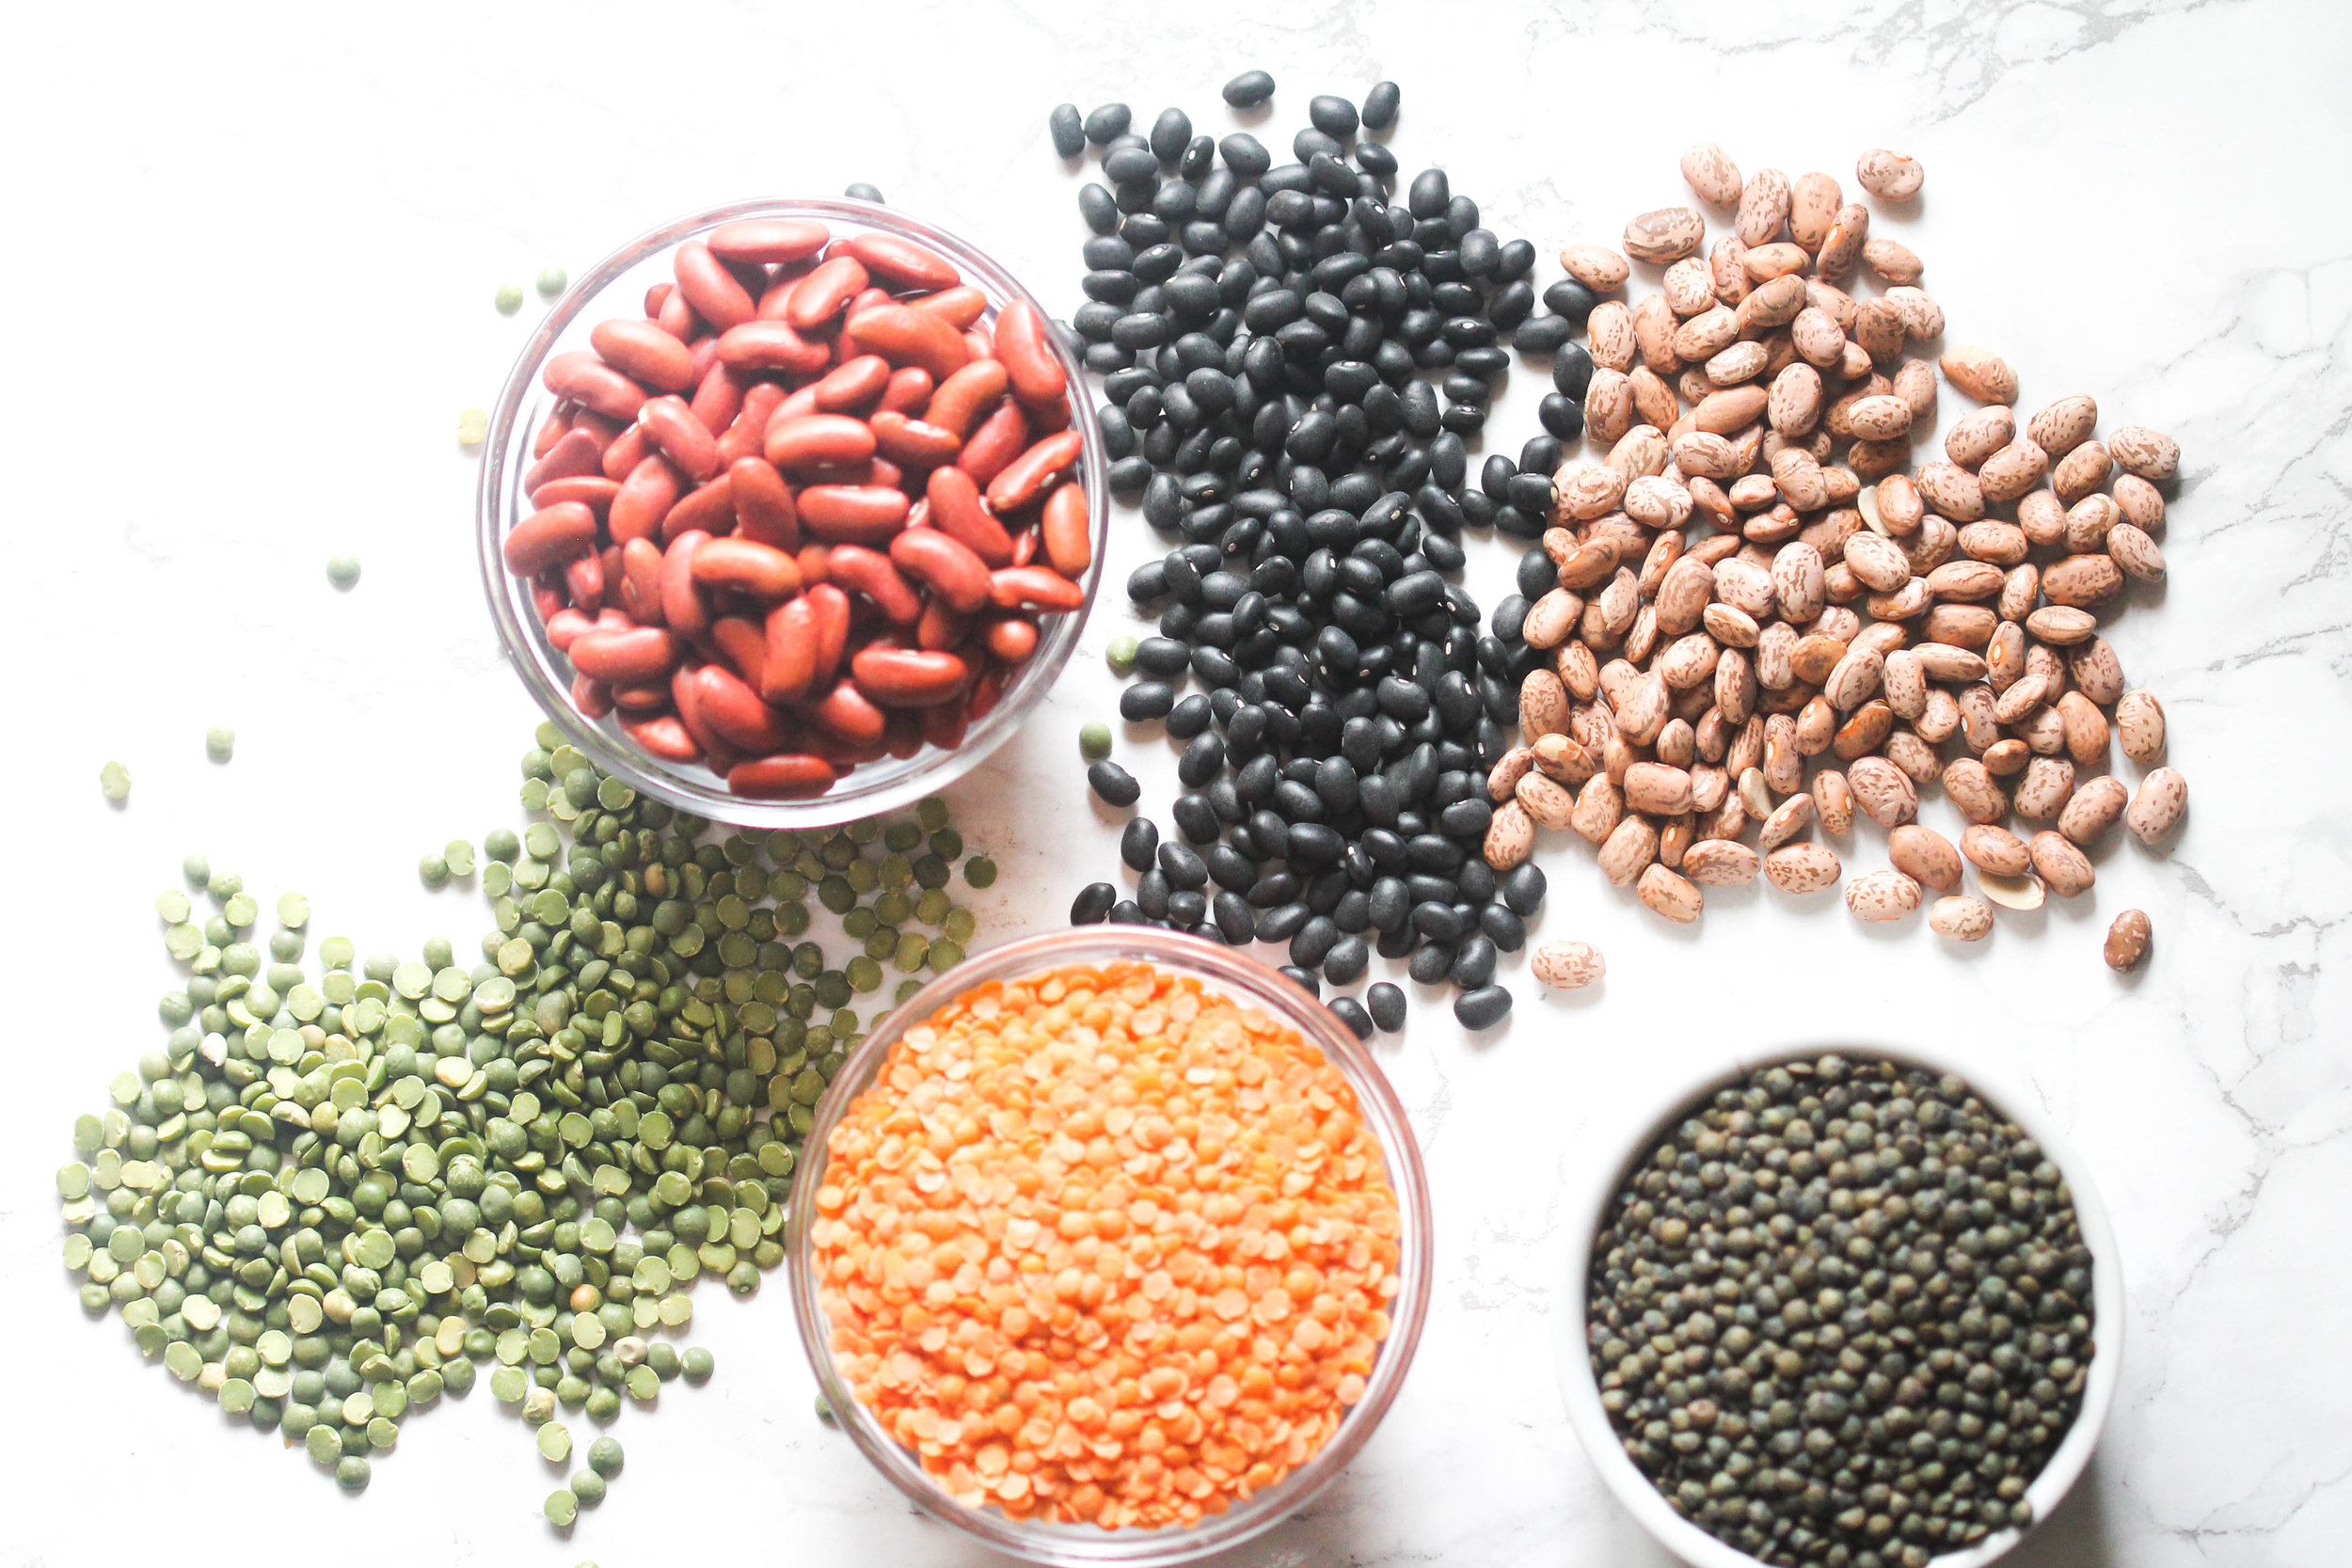 Legumes 101 - basics of legumes, lentils, and beans